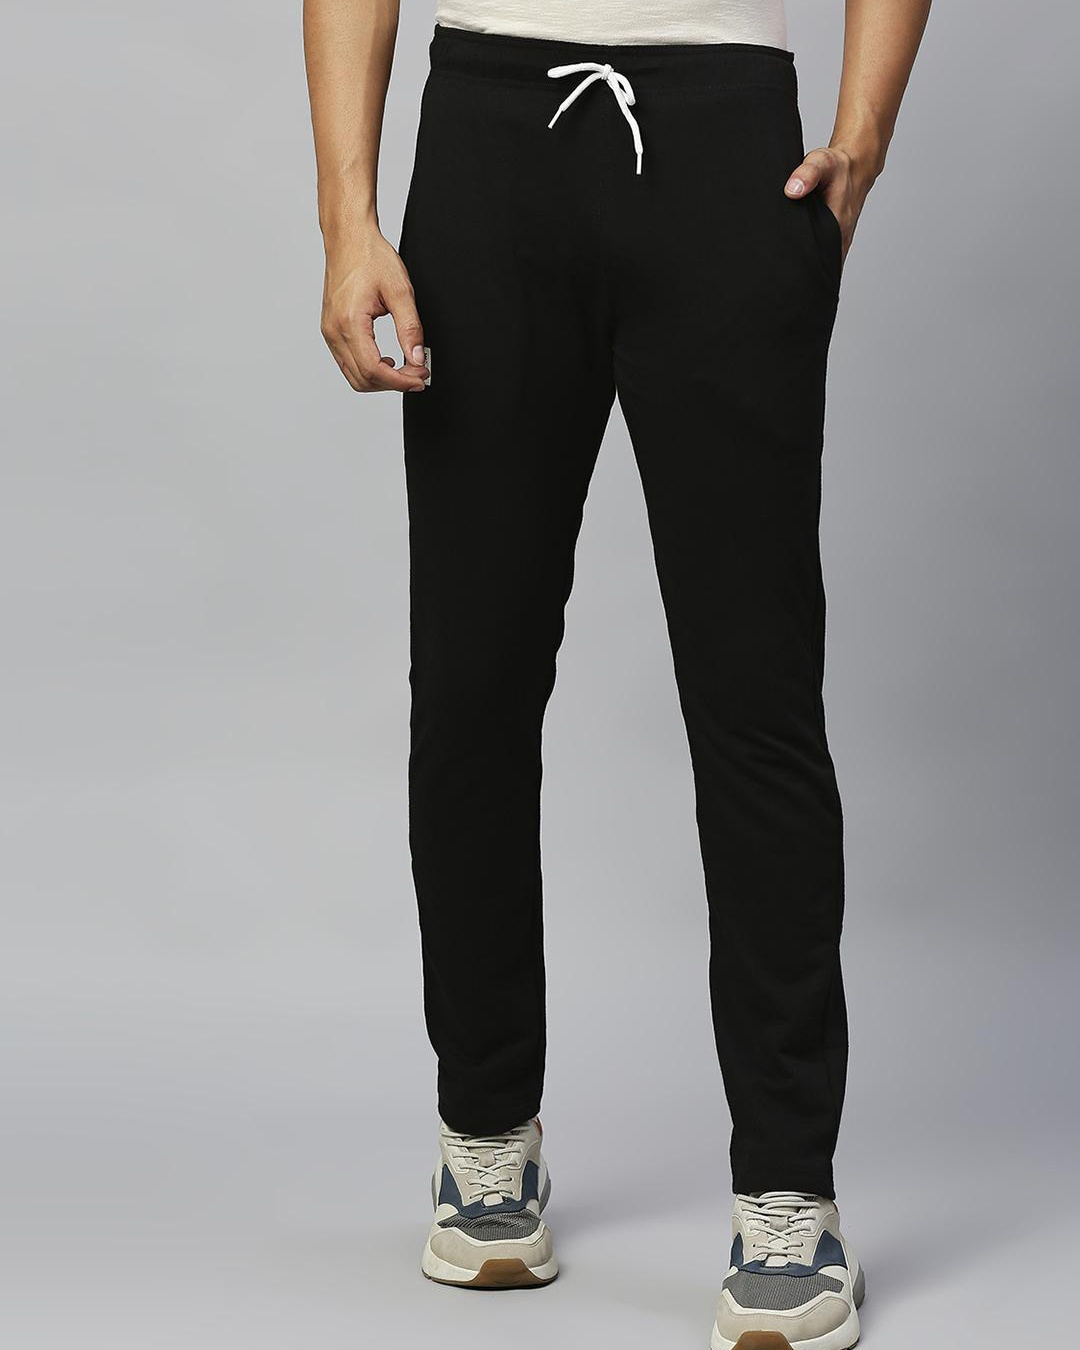 Buy Men's Black Track Pants Online at Bewakoof